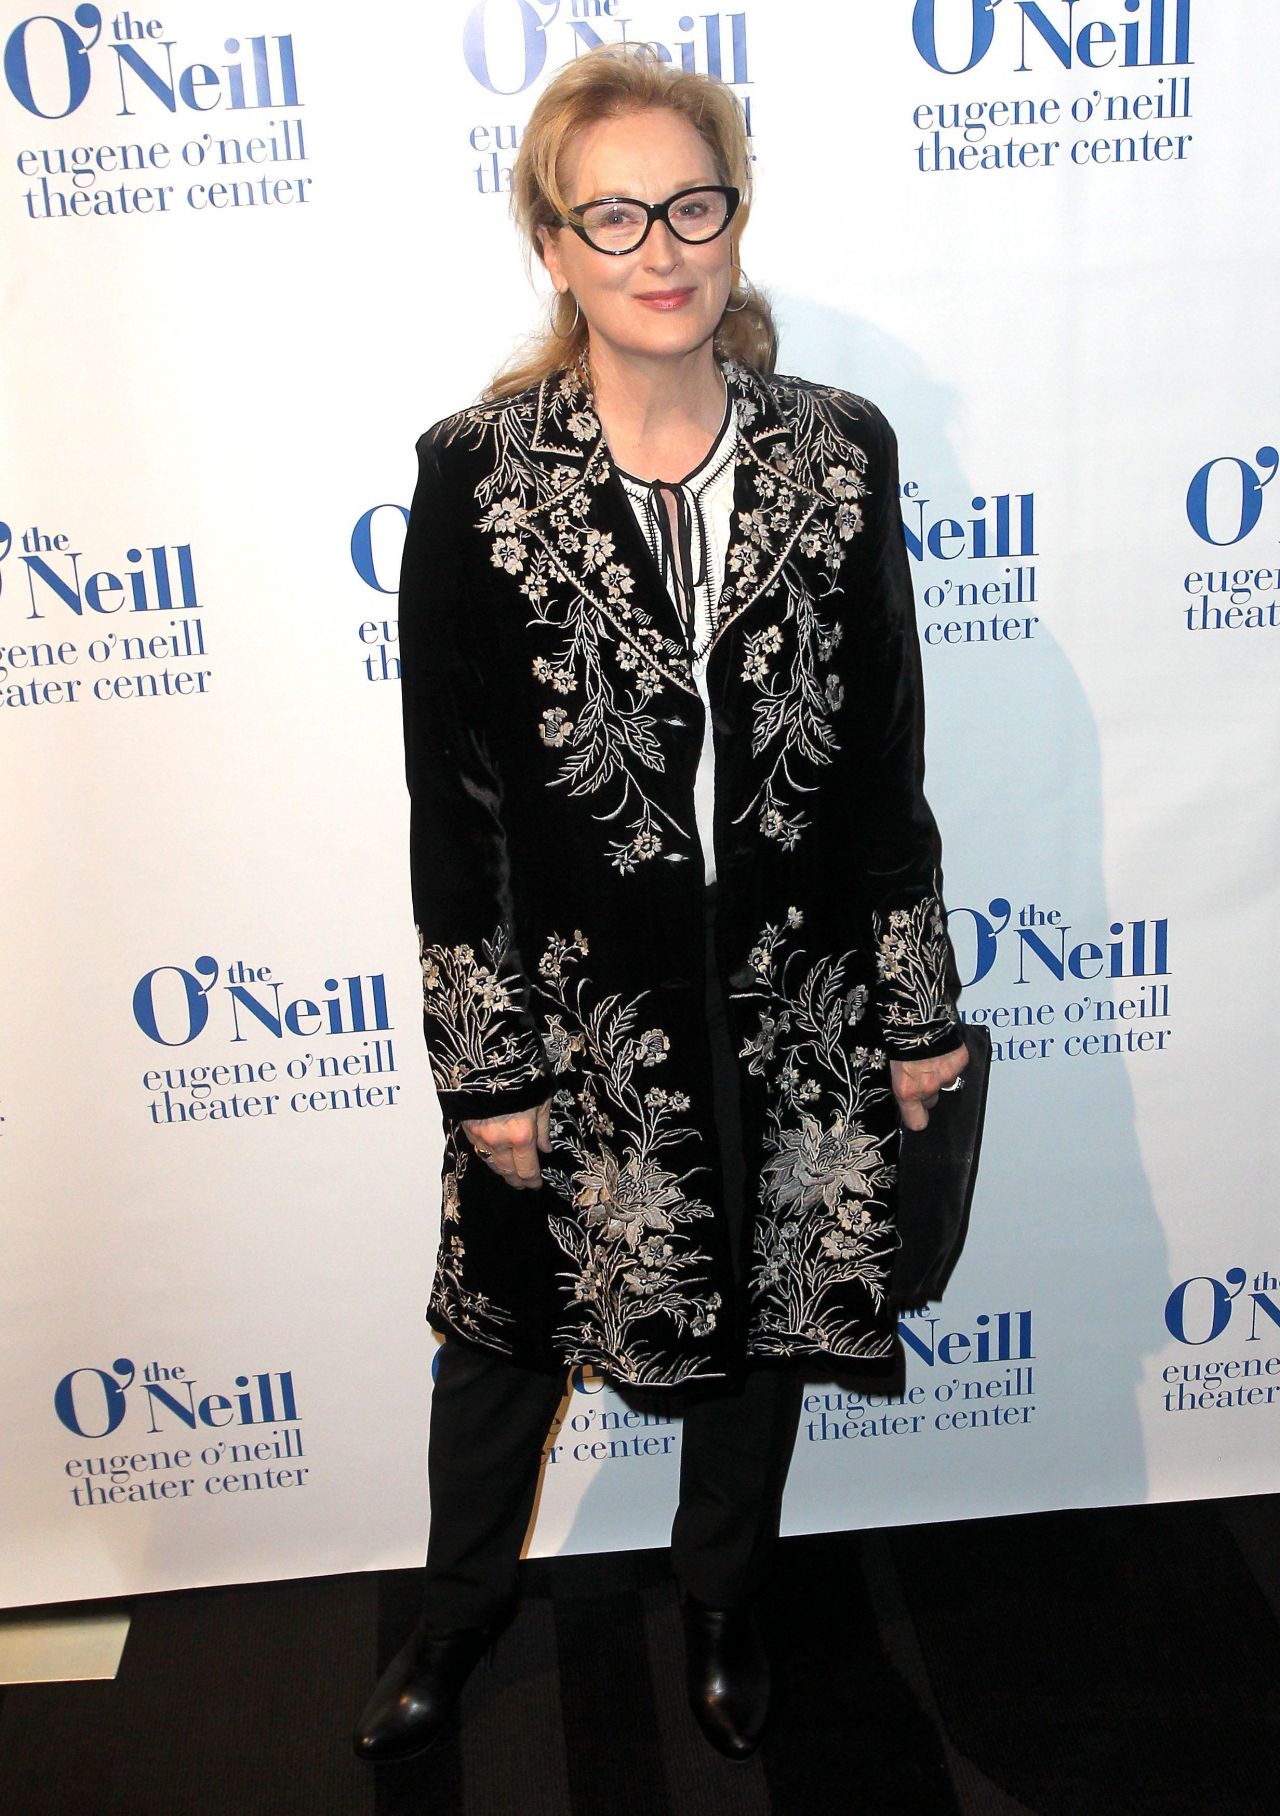 Meryl Streep & Catherine Zeta-Jones - Monte Cristo Award to honor Meryl Streep in New York City - April 2014